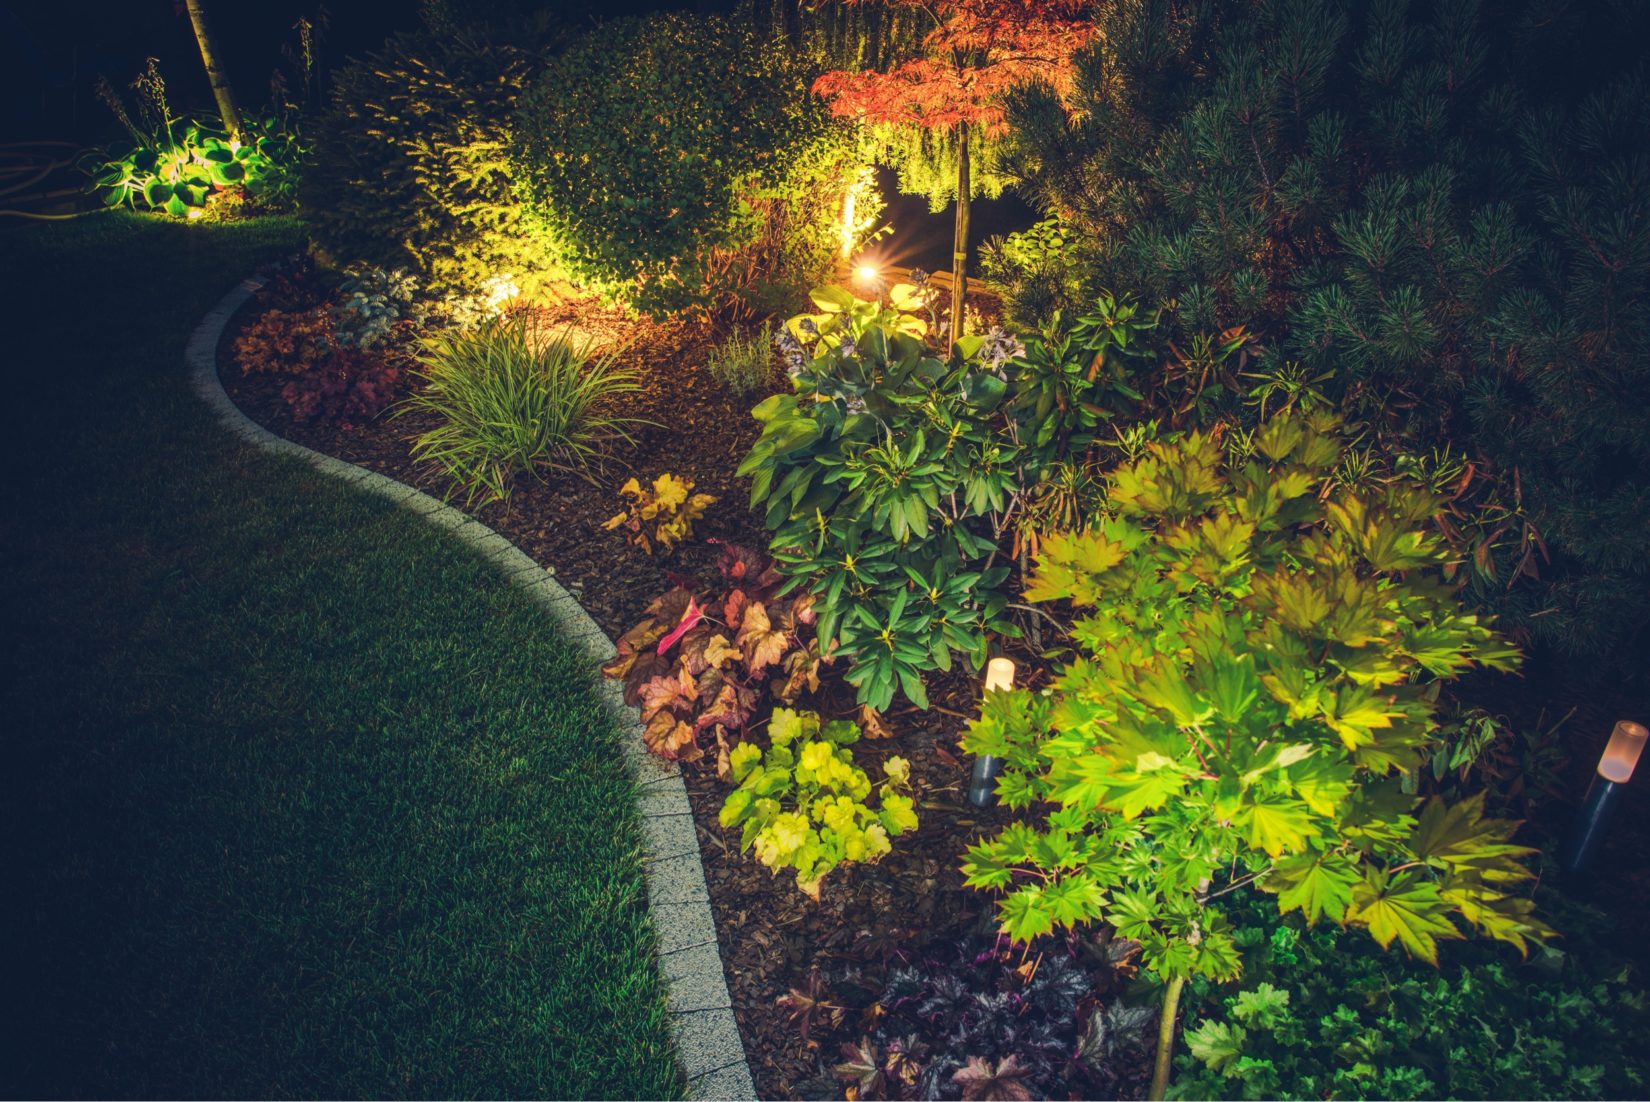 Landscape lighting Orlando - Outdoor landscape lighting for home garden at night